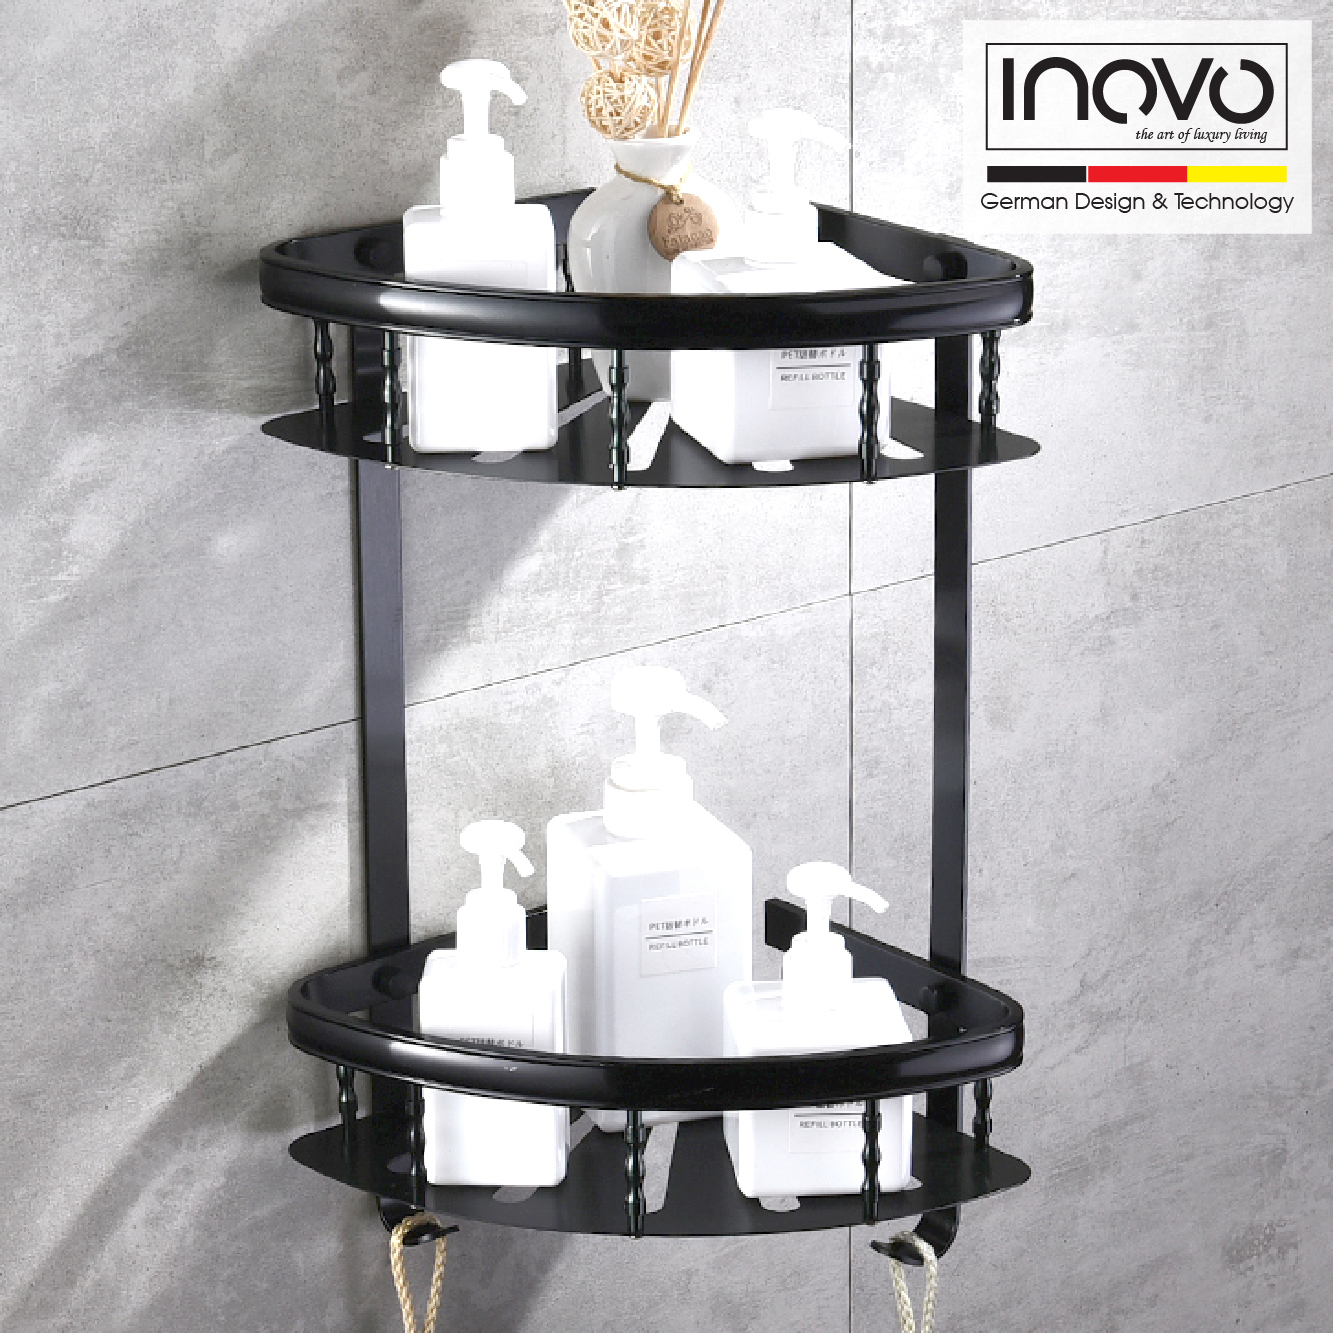 INOVO Enzo Bathroom Accessories in Black 6 pcs set - inovo